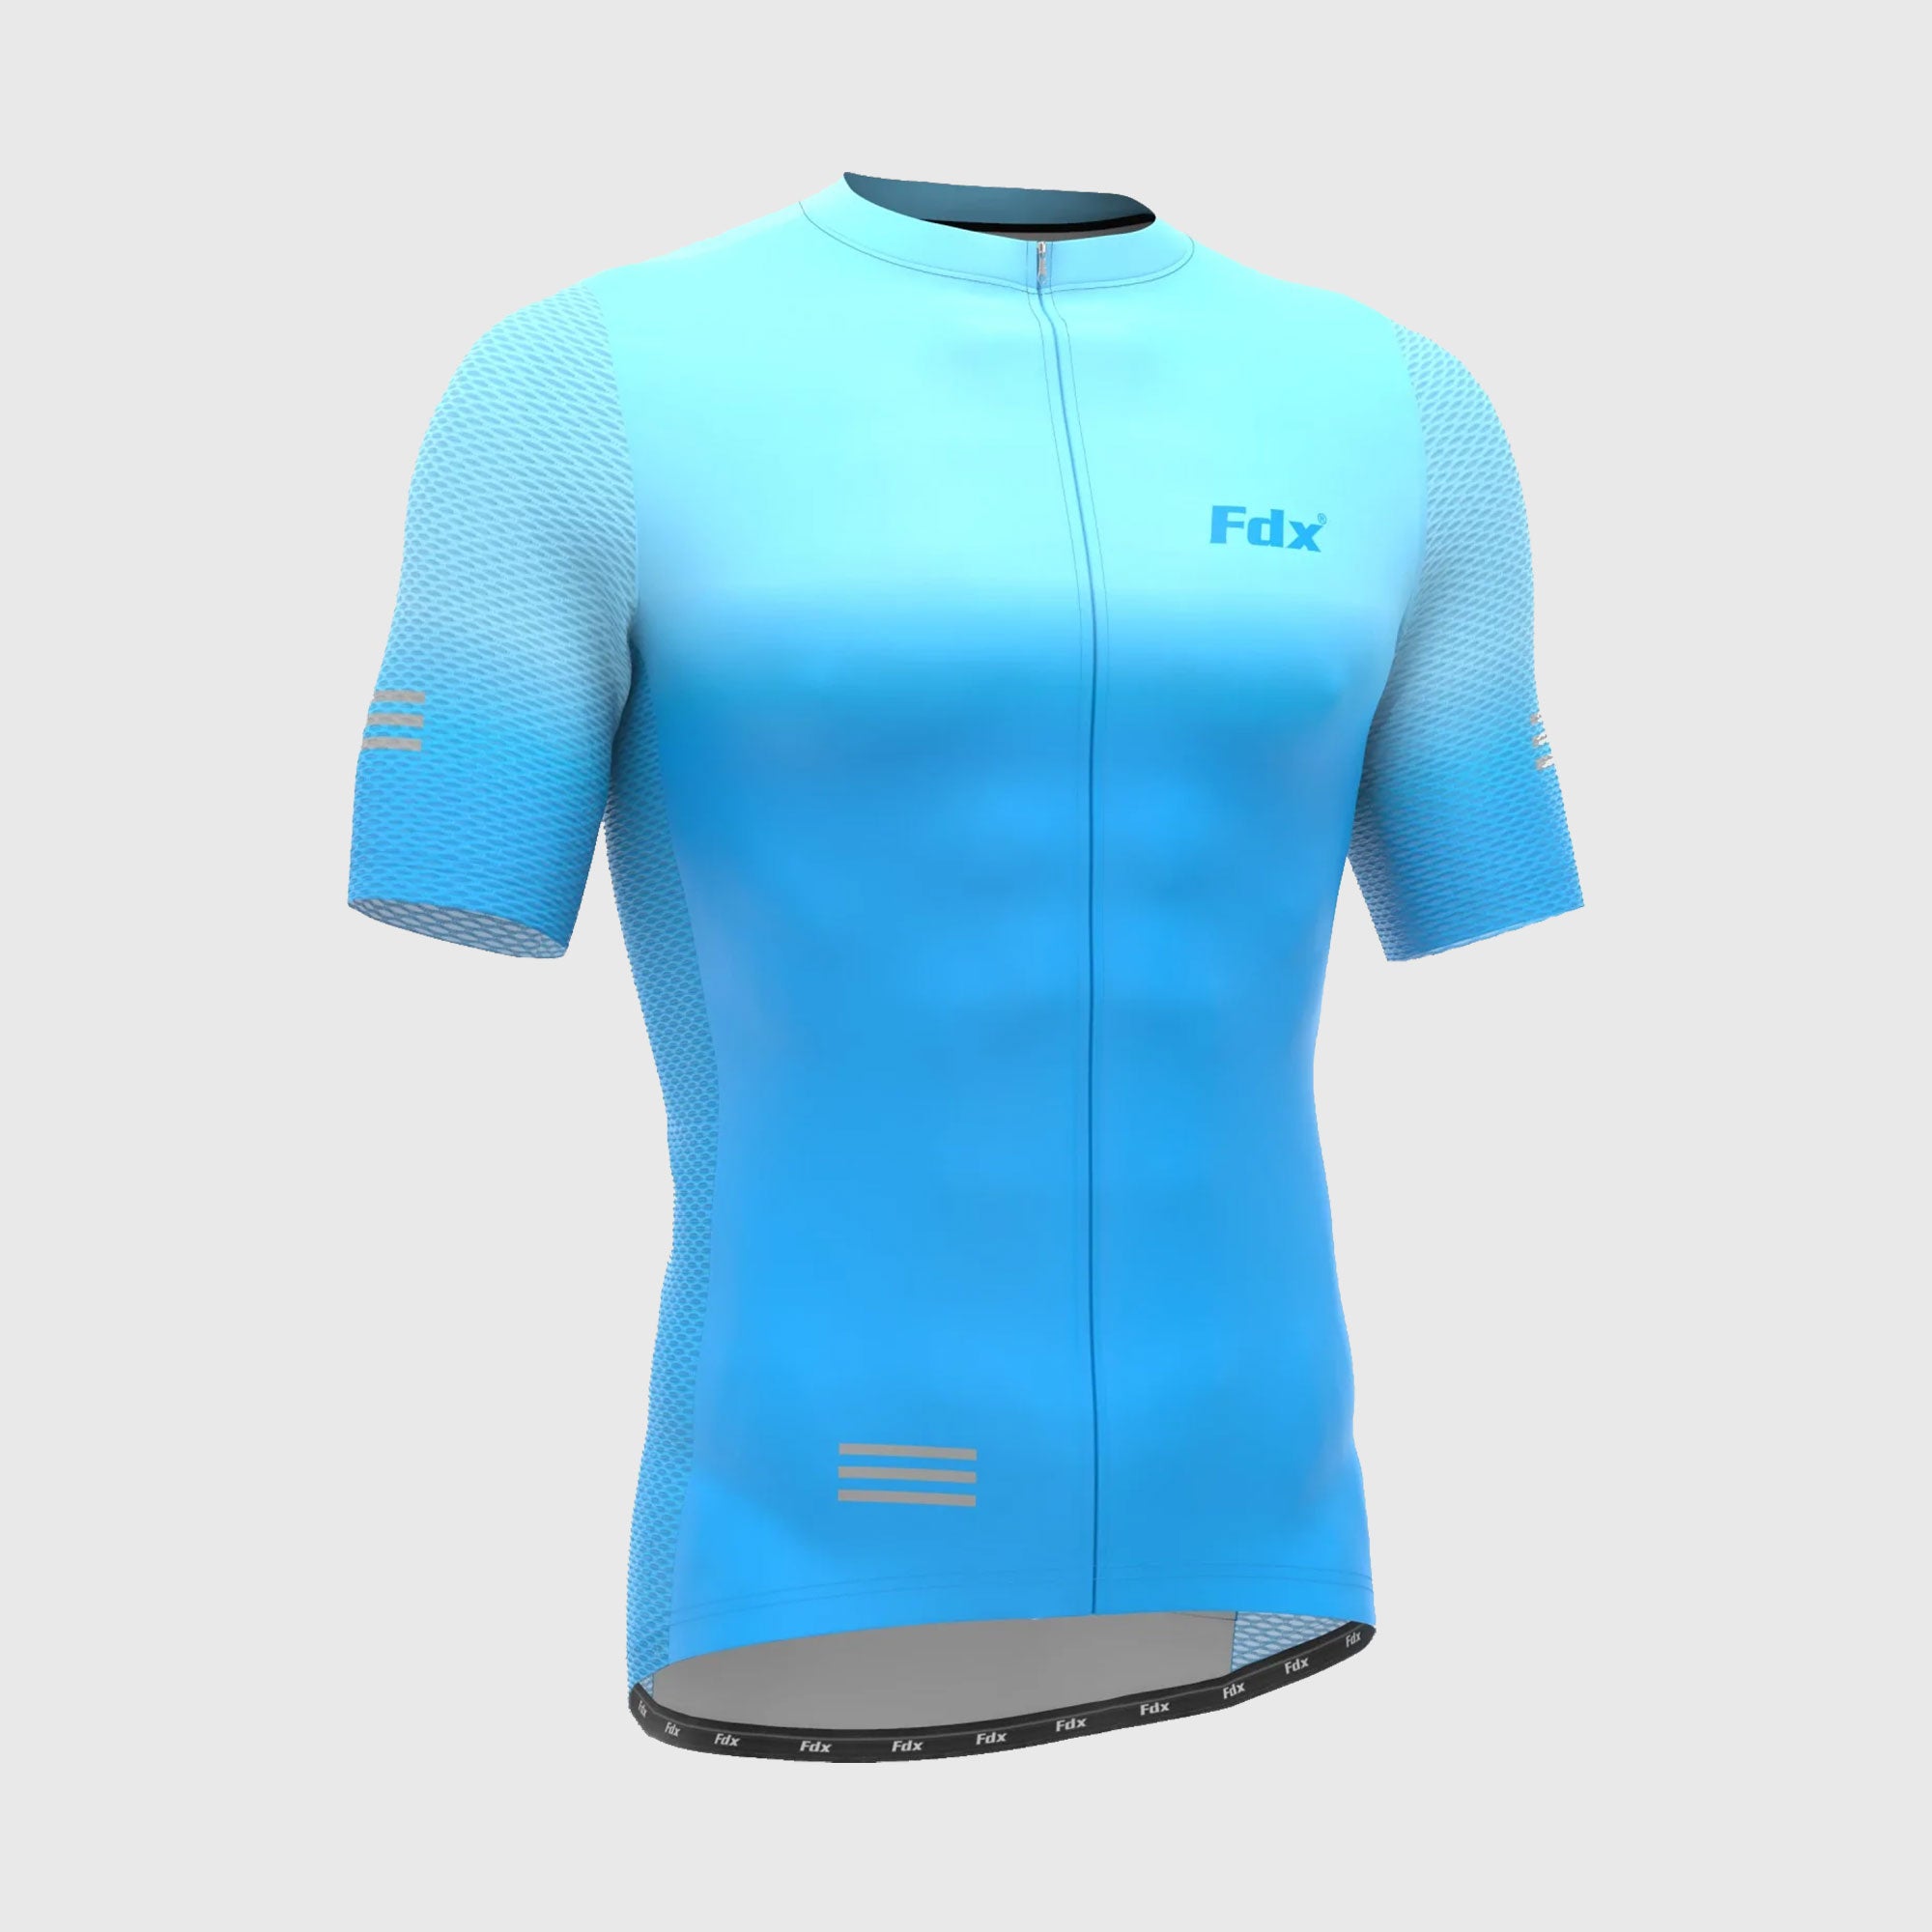 Fdx Duo Blue Men's Short Sleeve Summer Cycling Jersey